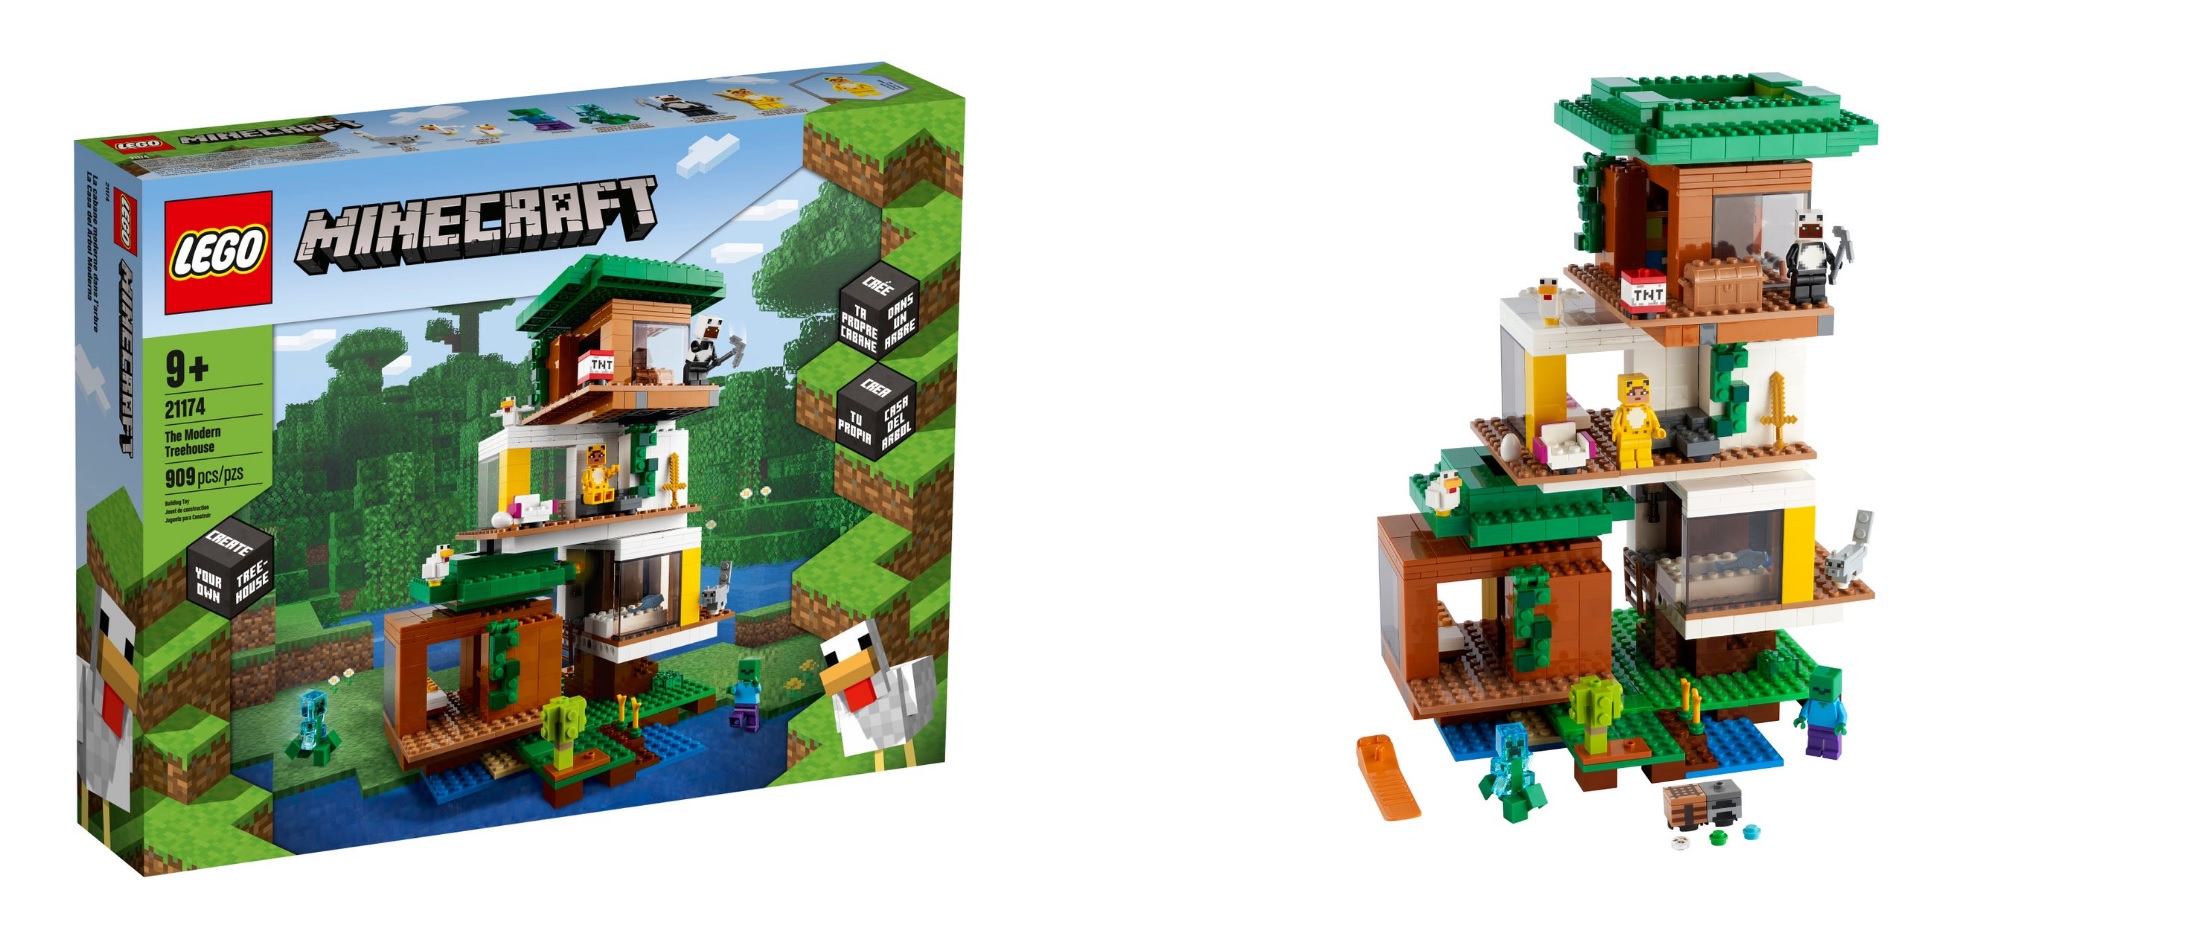 Summer 21 Lego Minecraft Lego Minecraft Dungeons Set Images Pricing Toys N Bricks